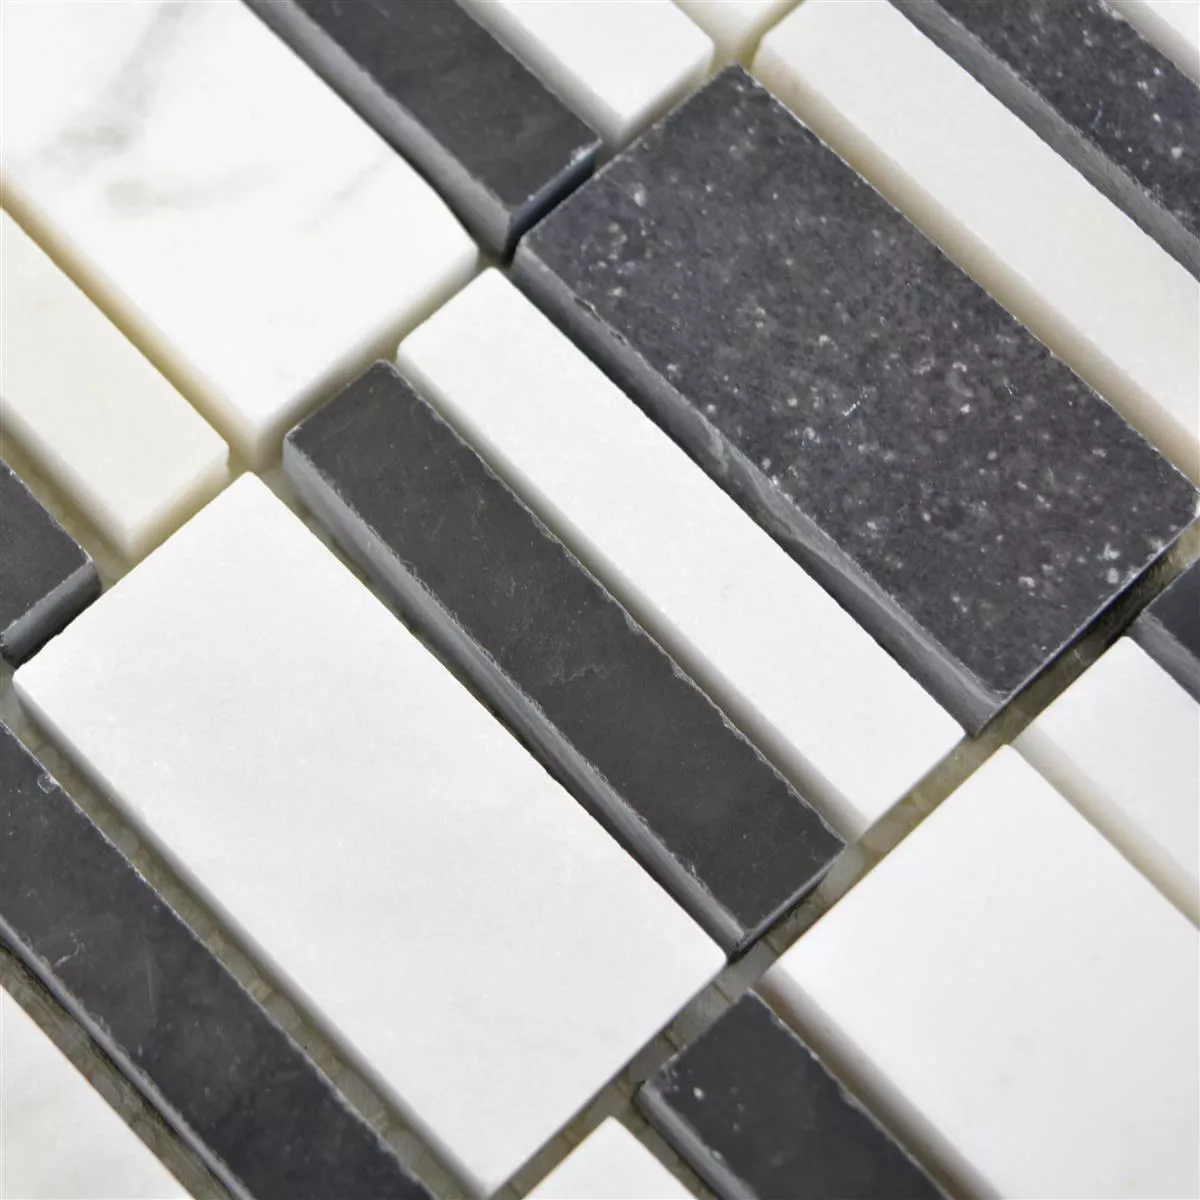 Sample Marble Mosaic Tiles Sunbury Black White